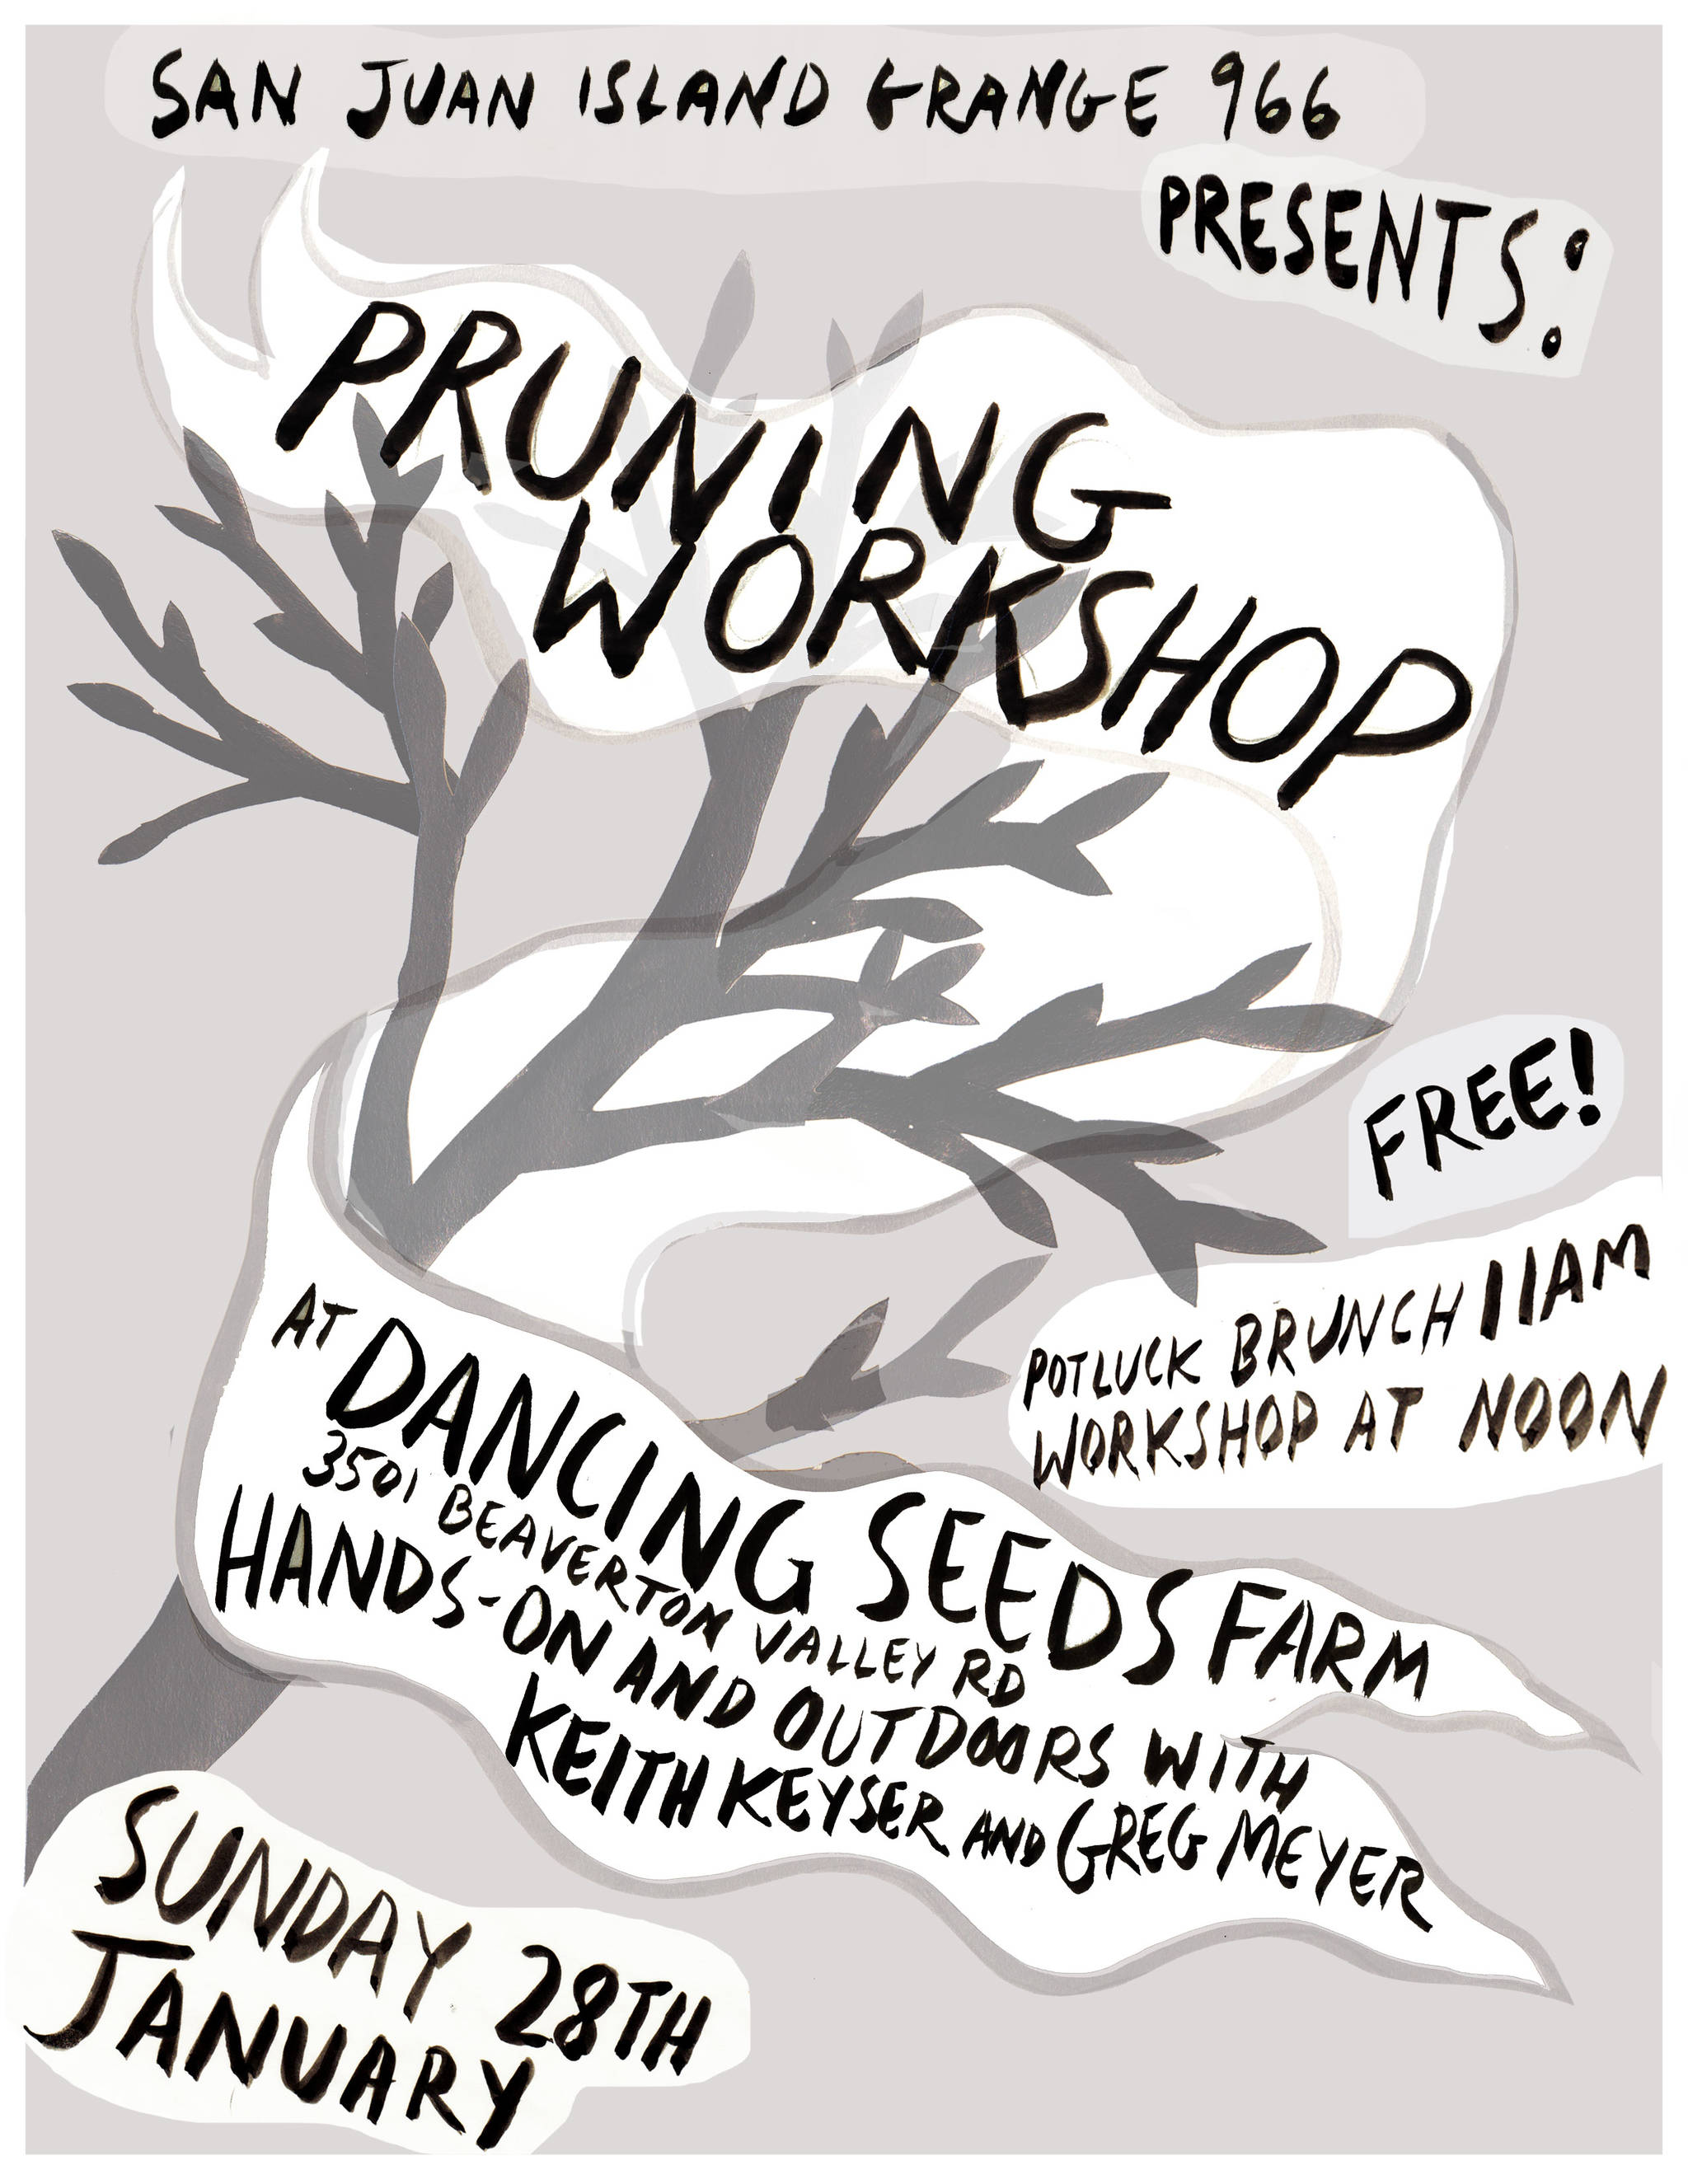 San Juan Island Grange presents free pruning workshop